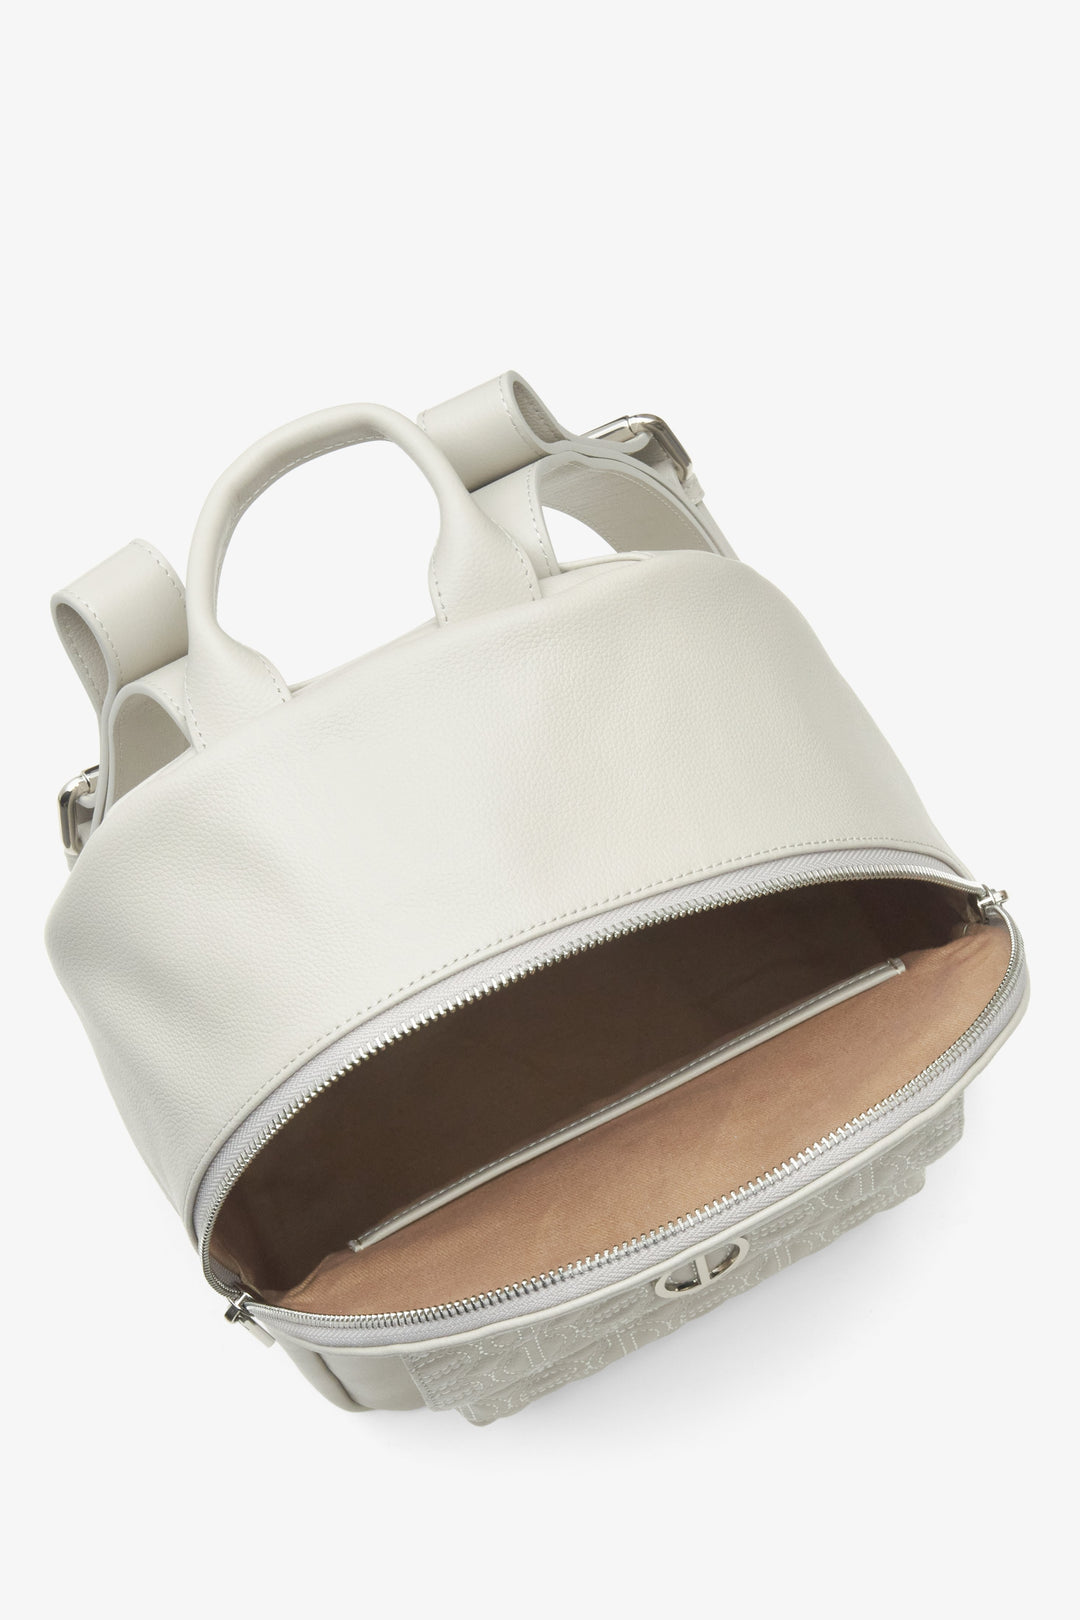 Women's light grey Estro backpack - close-up on interior.